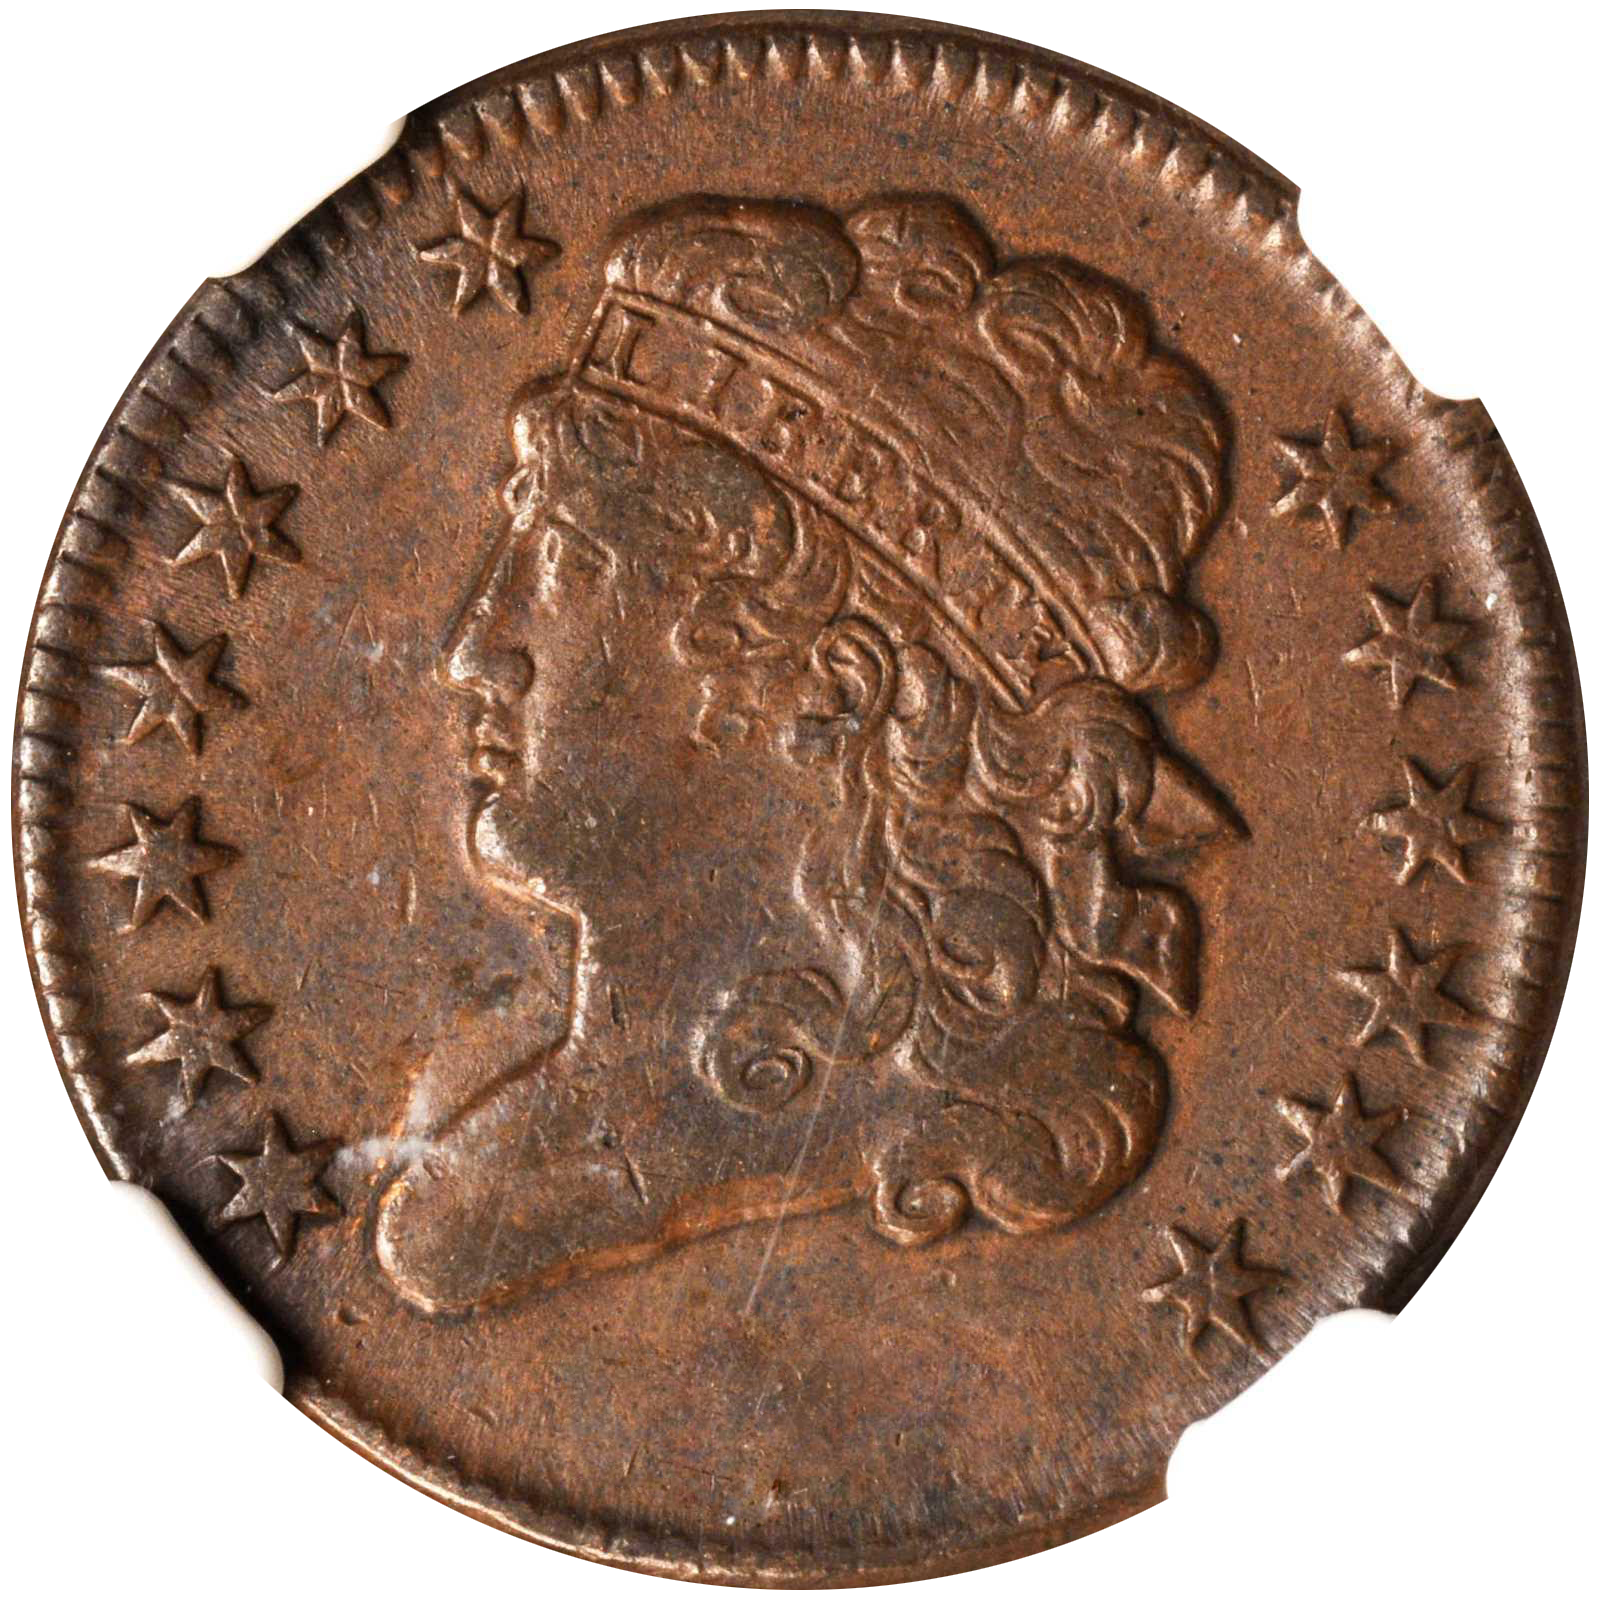 Value of 1831 Classic Head Half Cent